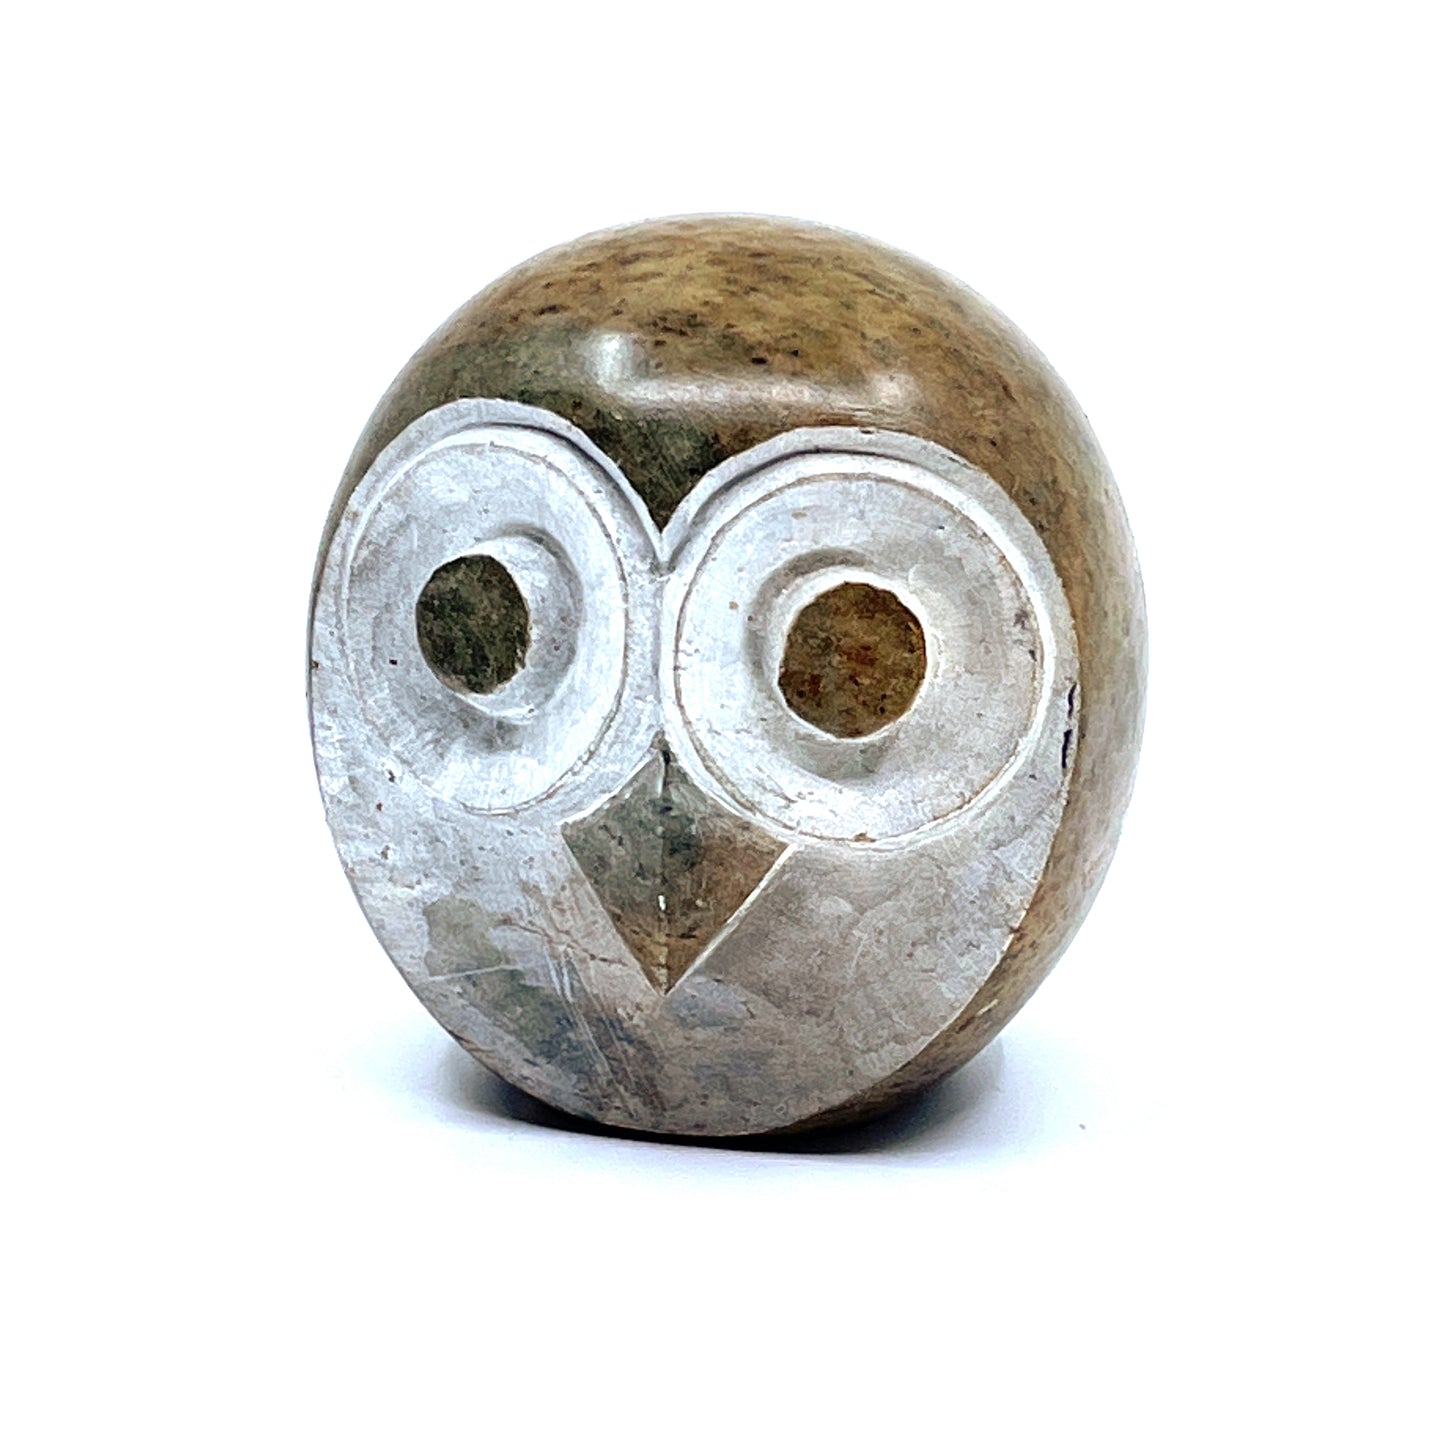 Shona Serpentine Stone Owl Sculpture